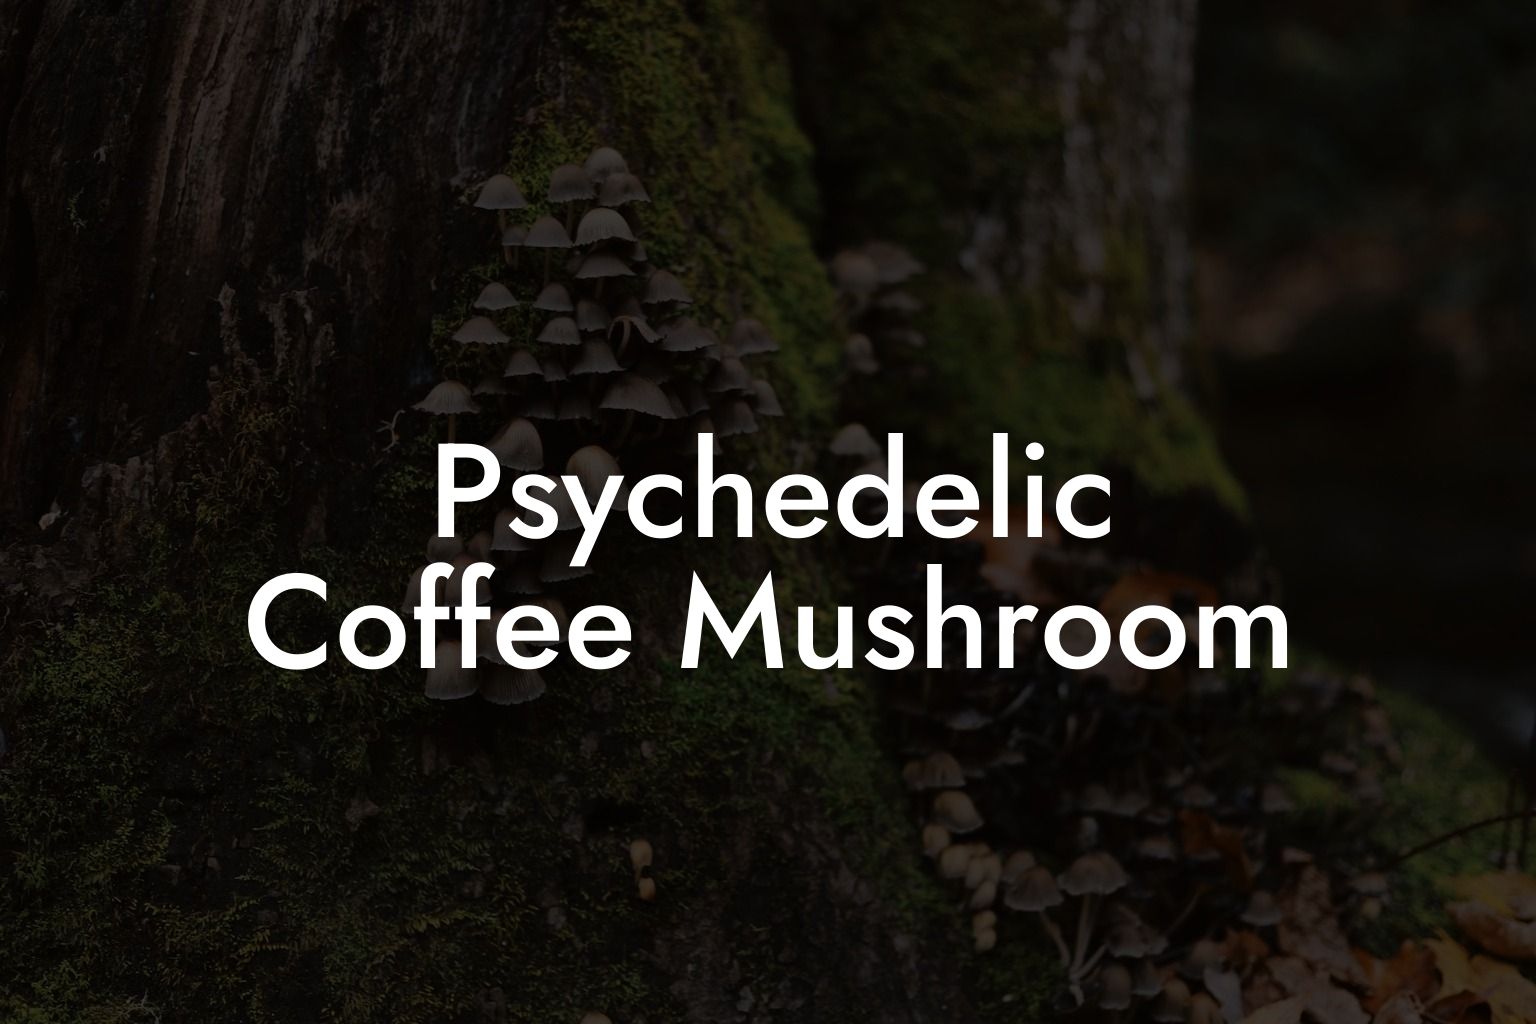 Psychedelic Coffee Mushroom